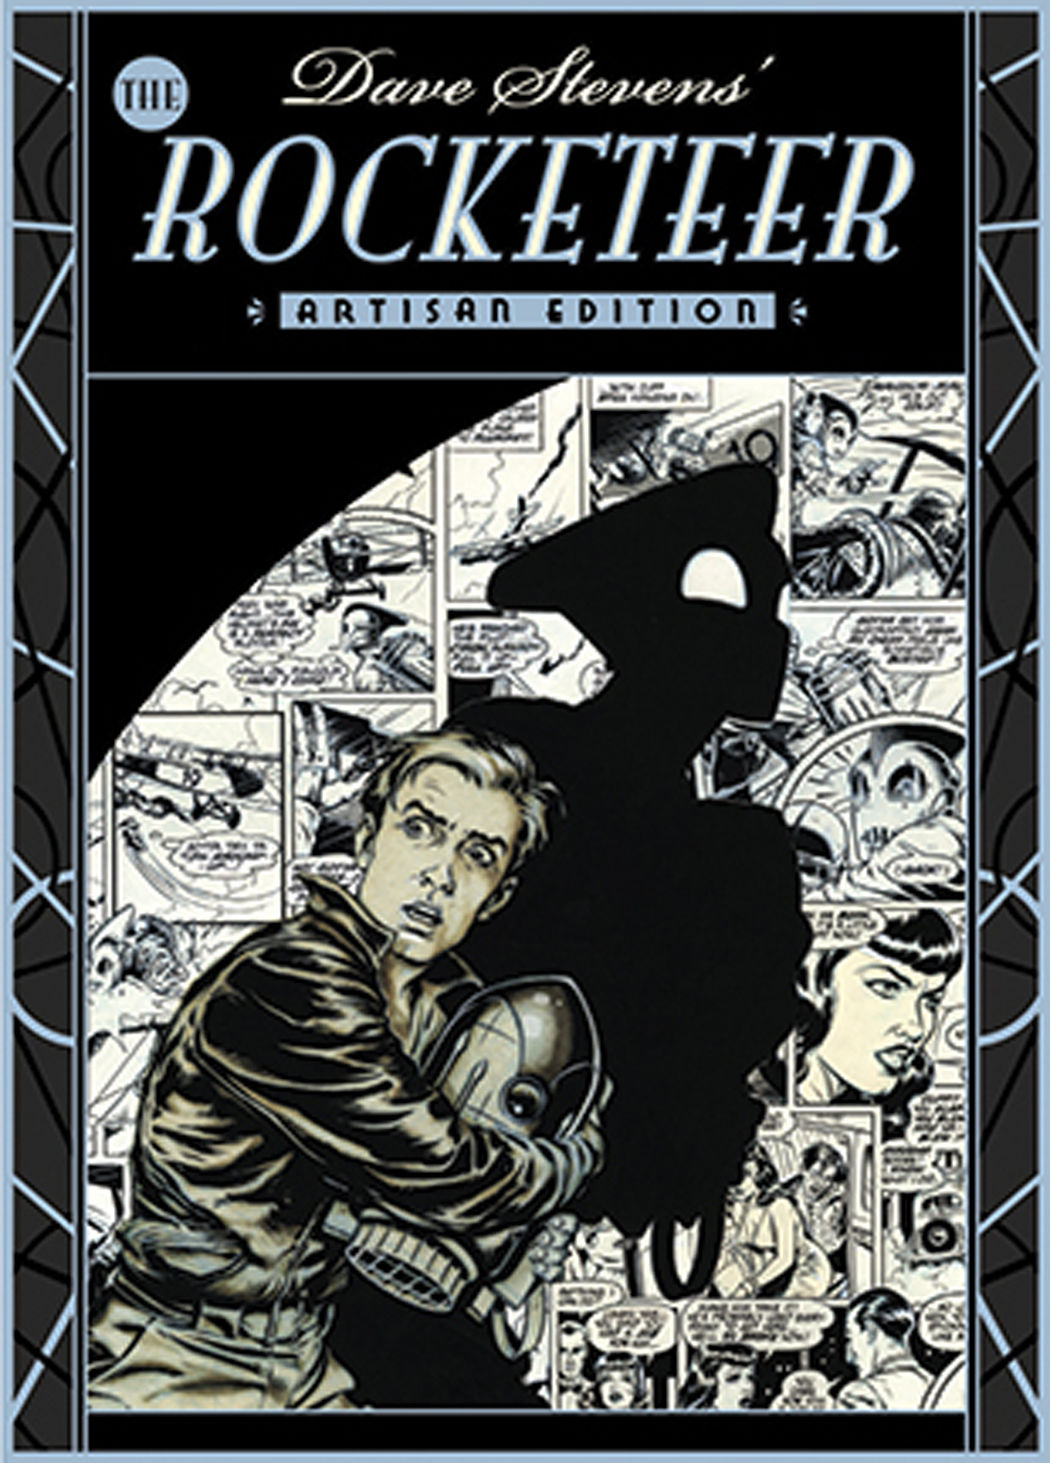 Dave Stevens The Rocketeer Artisan Edition cover